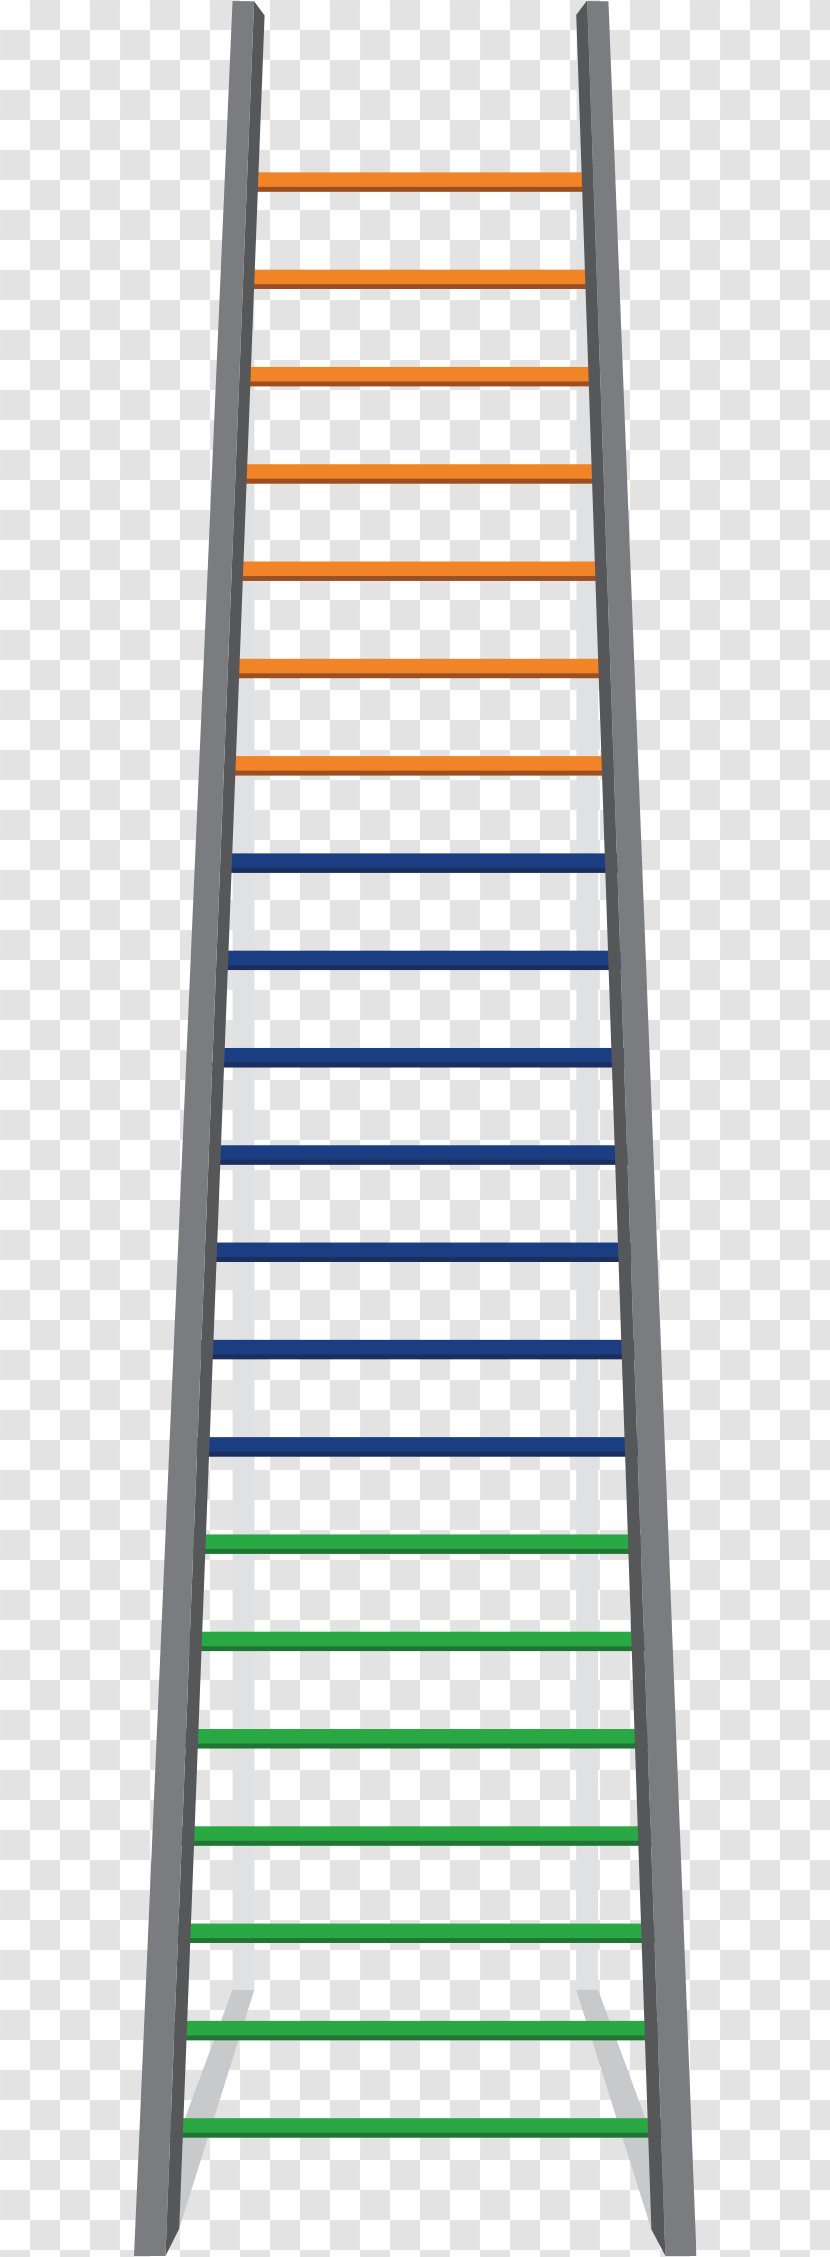 Ladder Wall Bars Wood Computer Software - Bar Chart - Ladders Transparent PNG